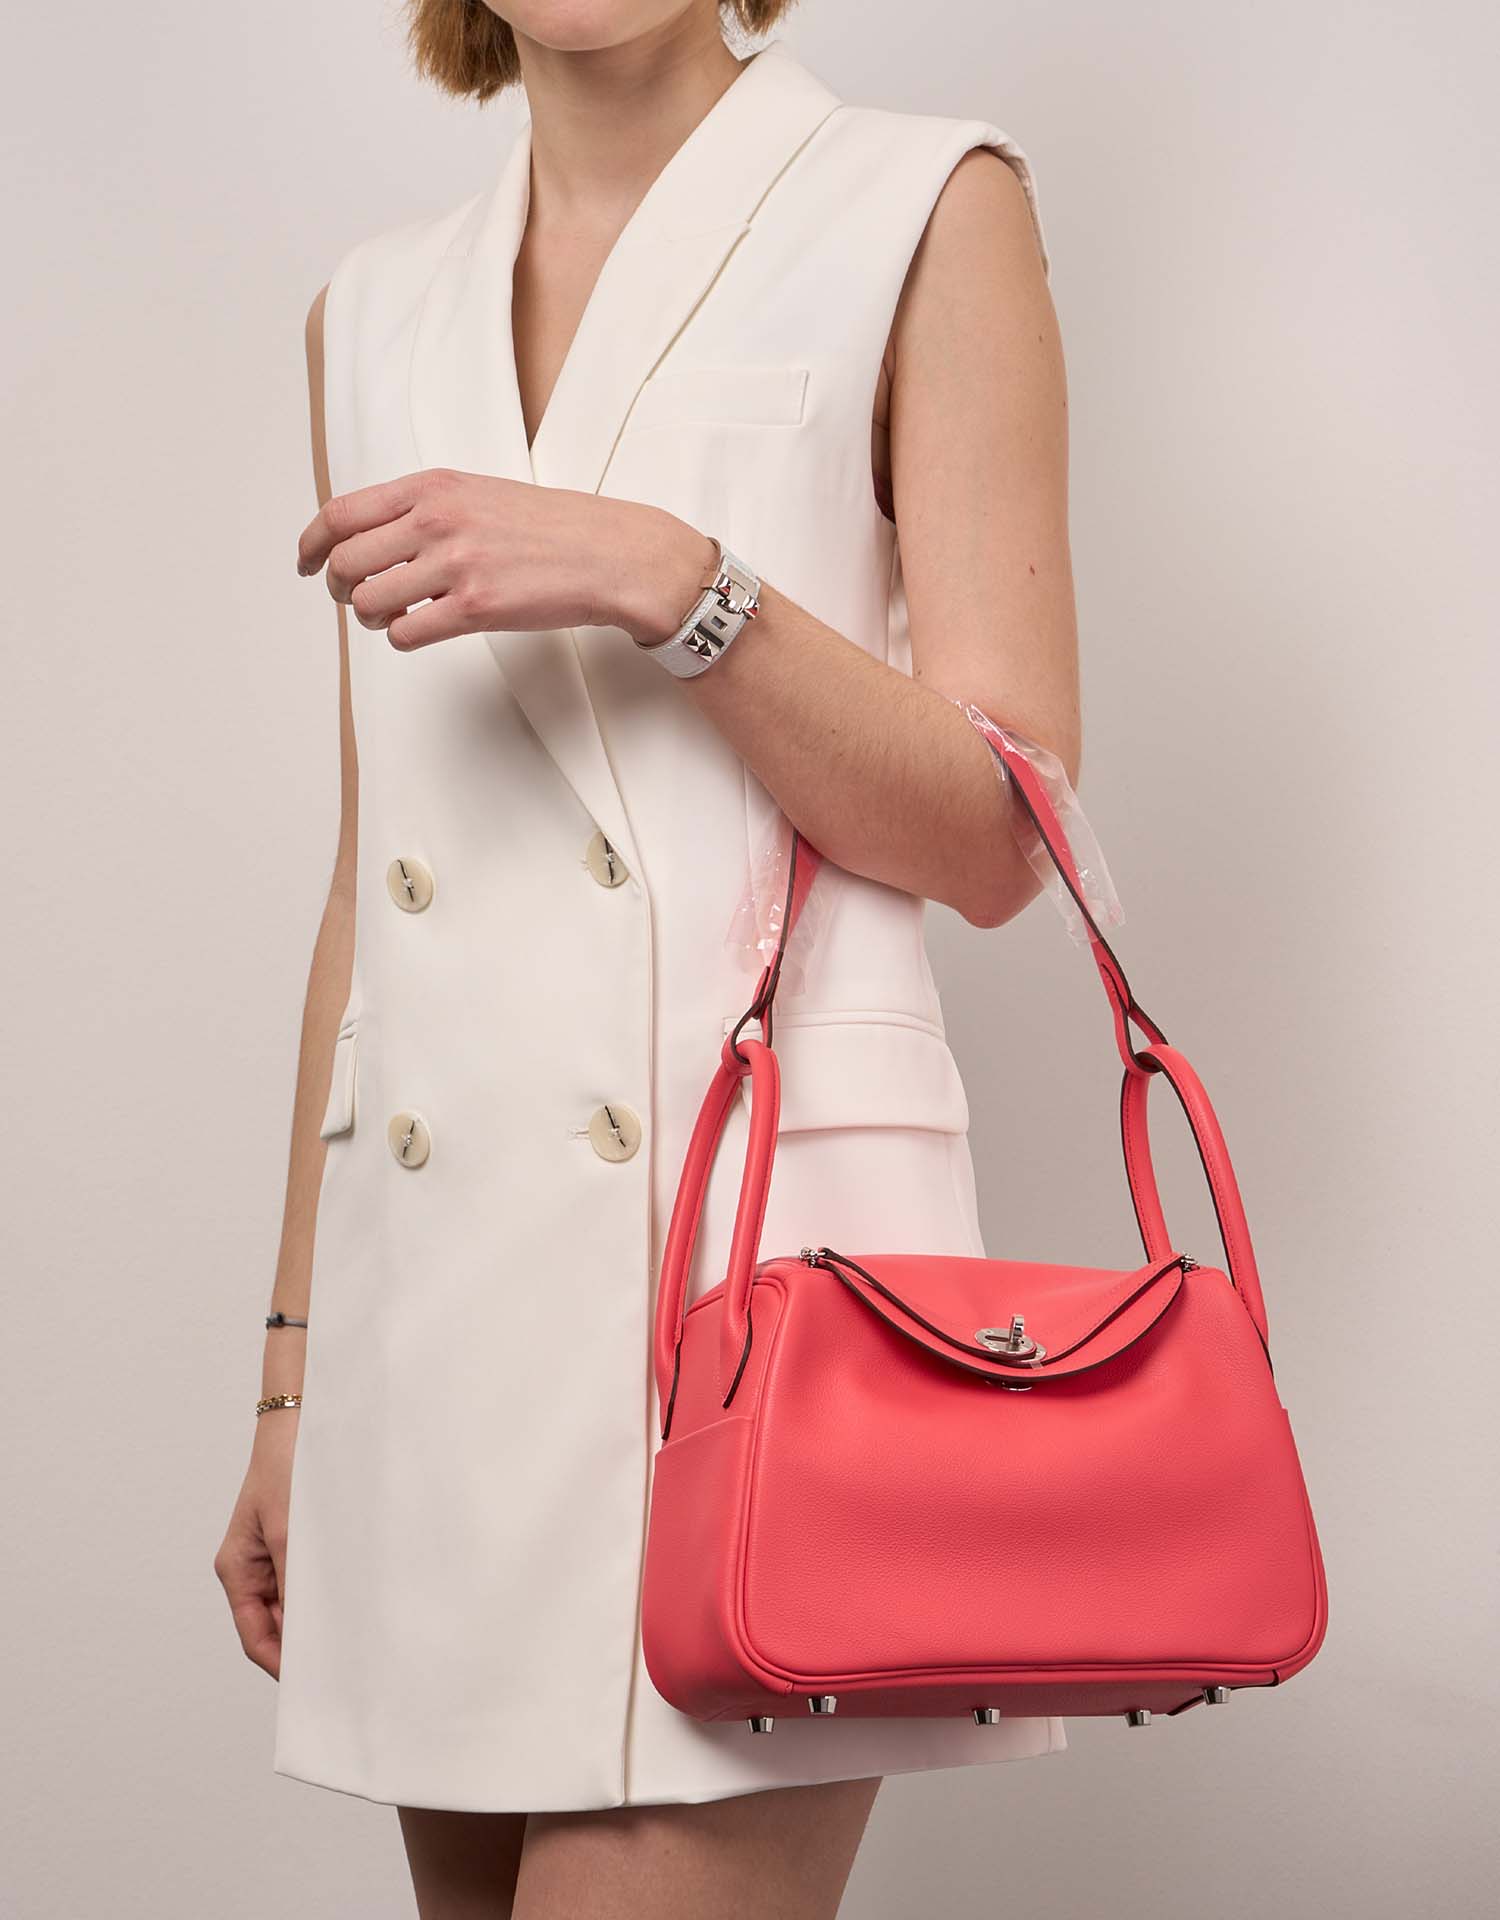 Hermès Lindy 26 RoseTexas Sizes Worn | Sell your designer bag on Saclab.com